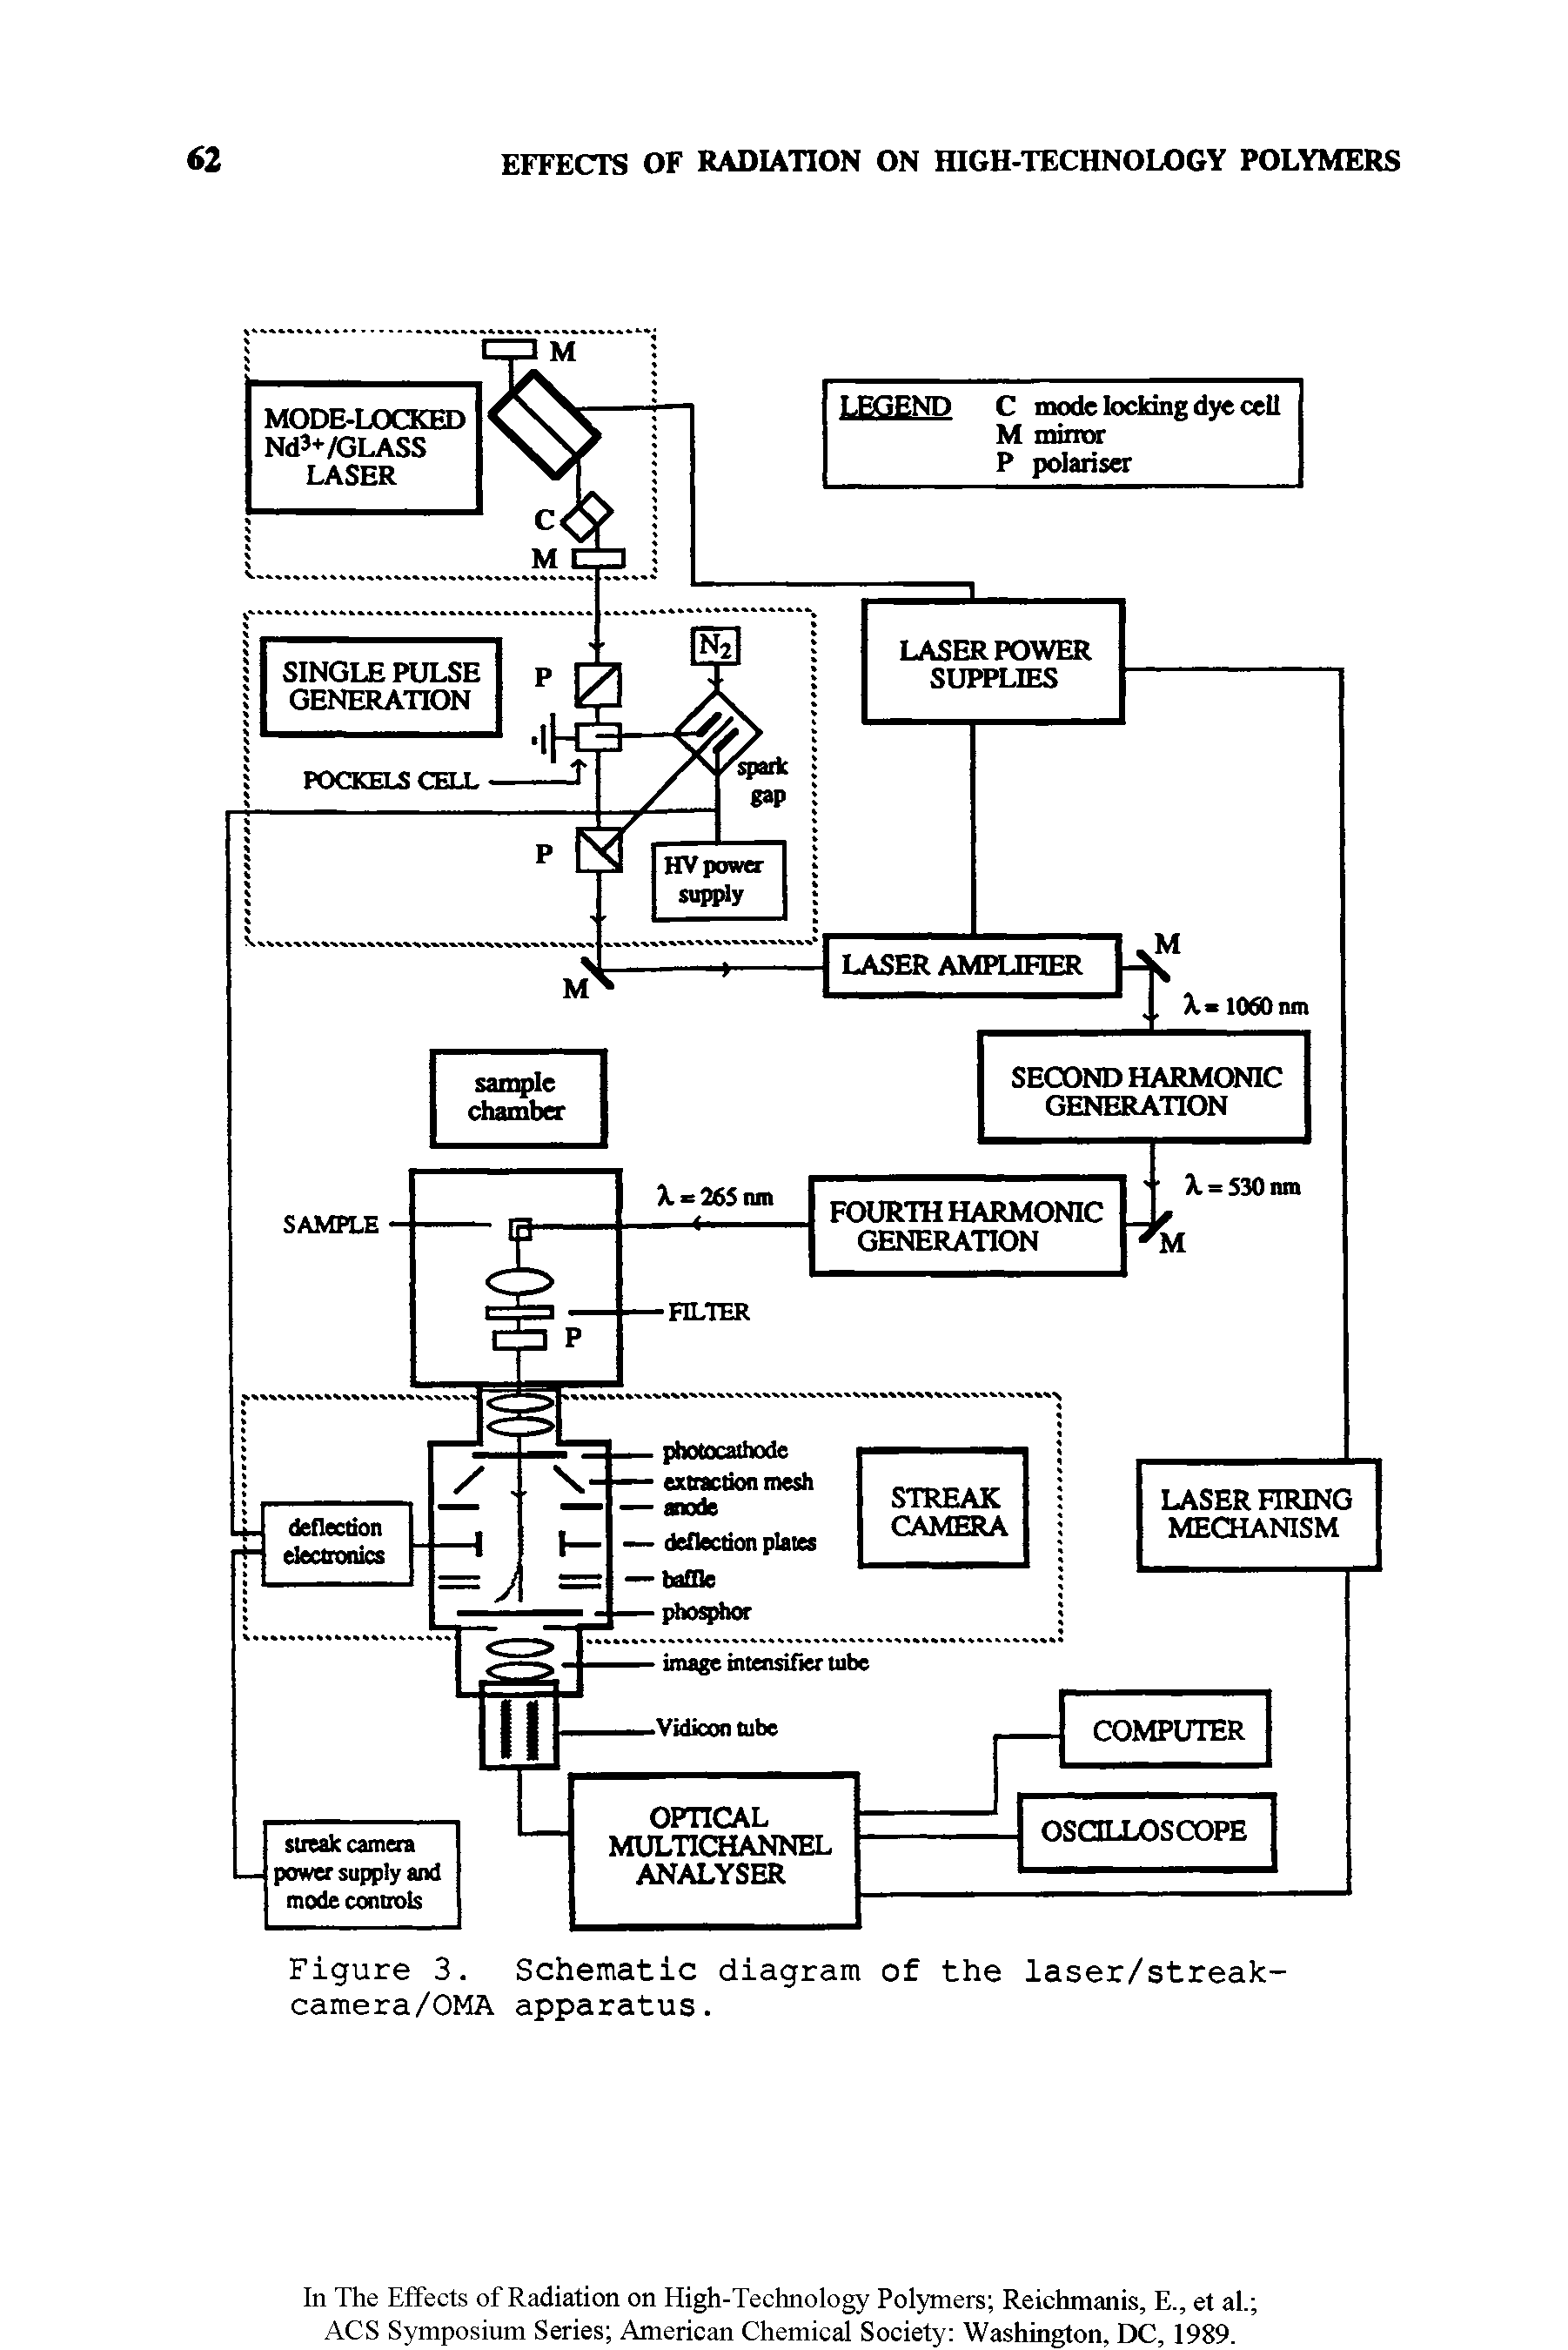 Figure 3. Schematic diagram of the laser/streak-camera/OMA apparatus.